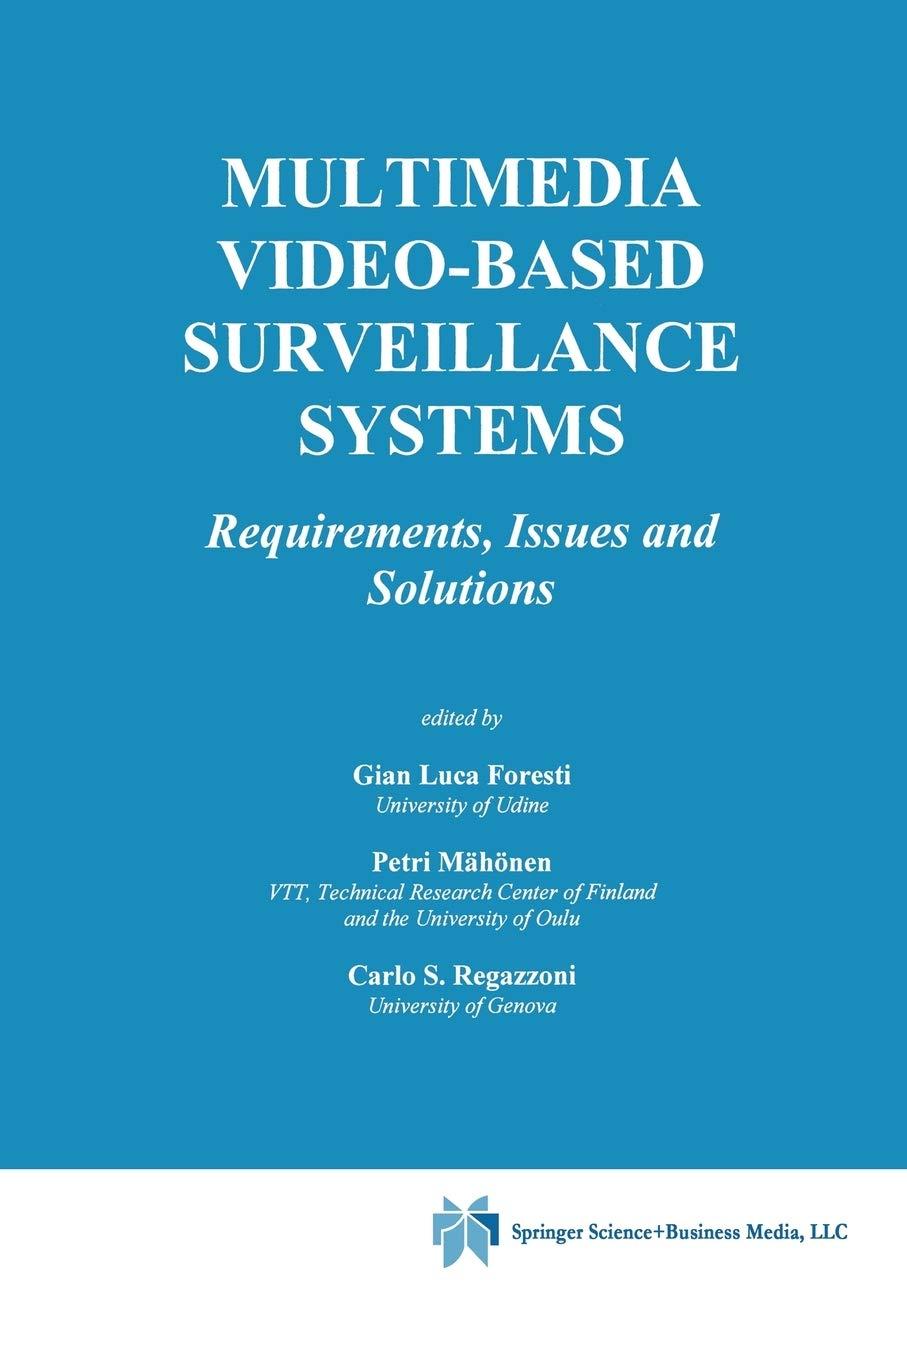 multimedia video based surveillance systems 2000 edition gian luca foresti, petri mähönen, carlo s.